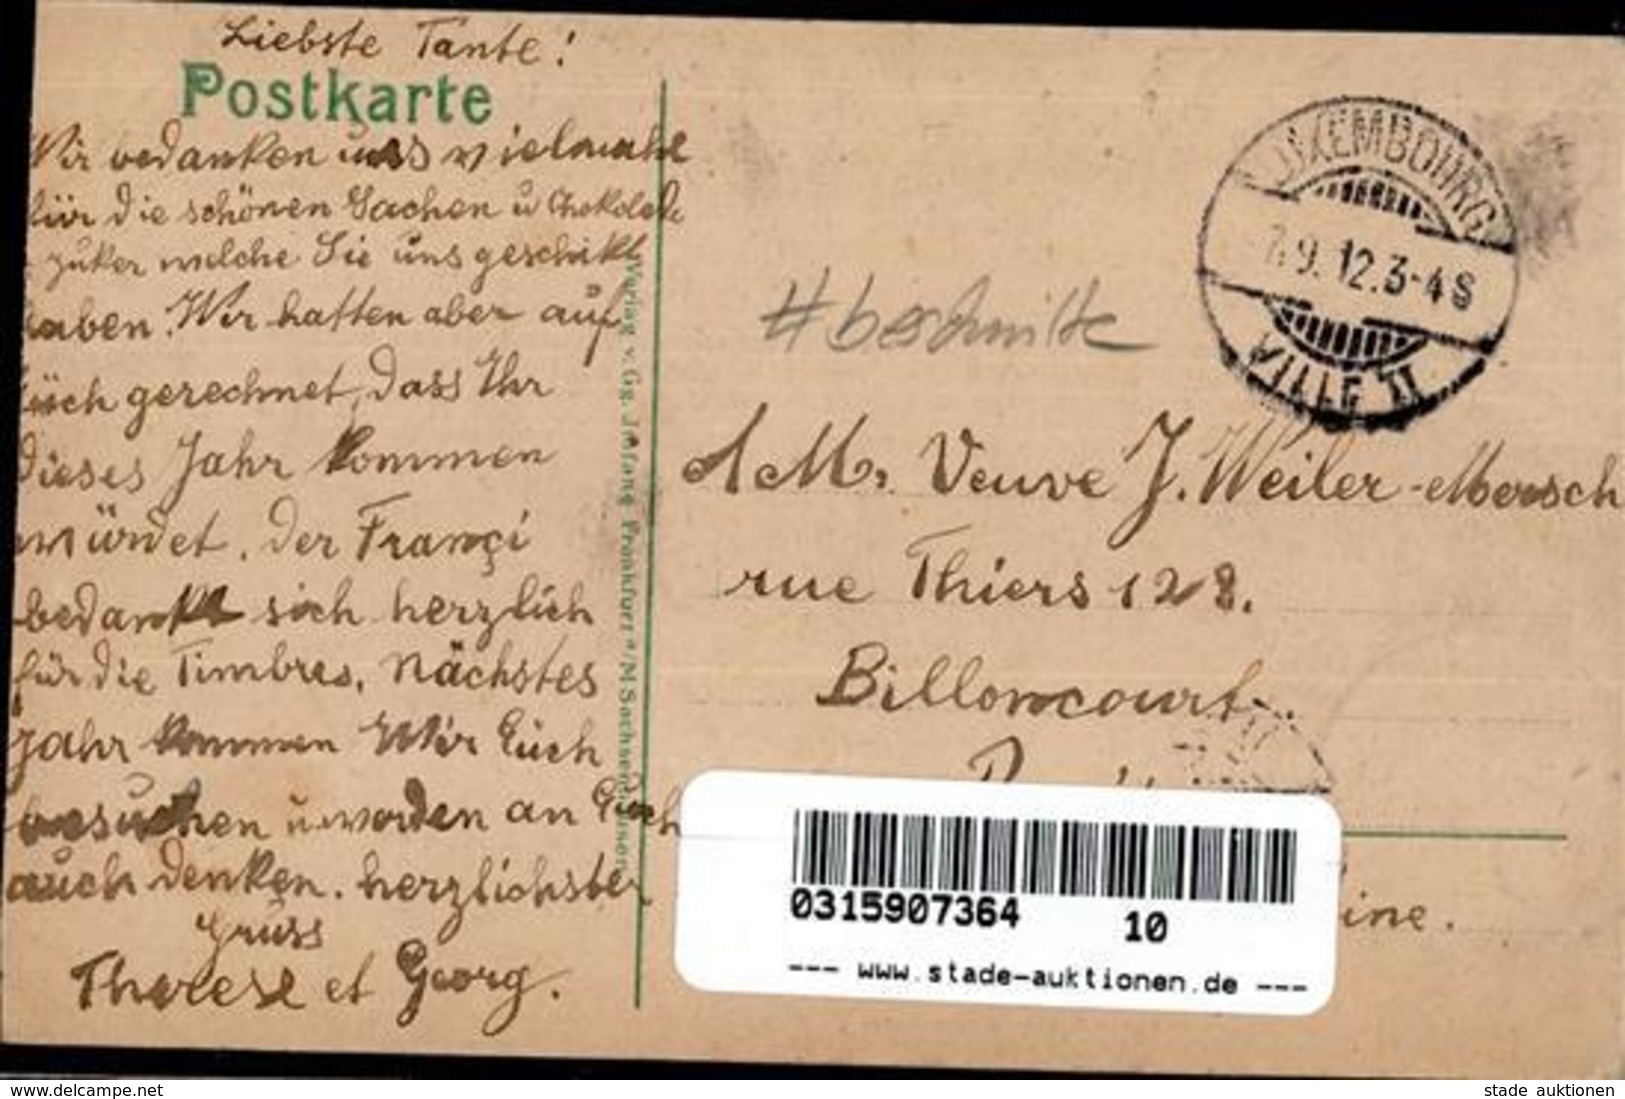 Drehorgel Luxemburger Schobermesse 1912 I-II (fleckig) Orgue De Barbarie - Non Classificati